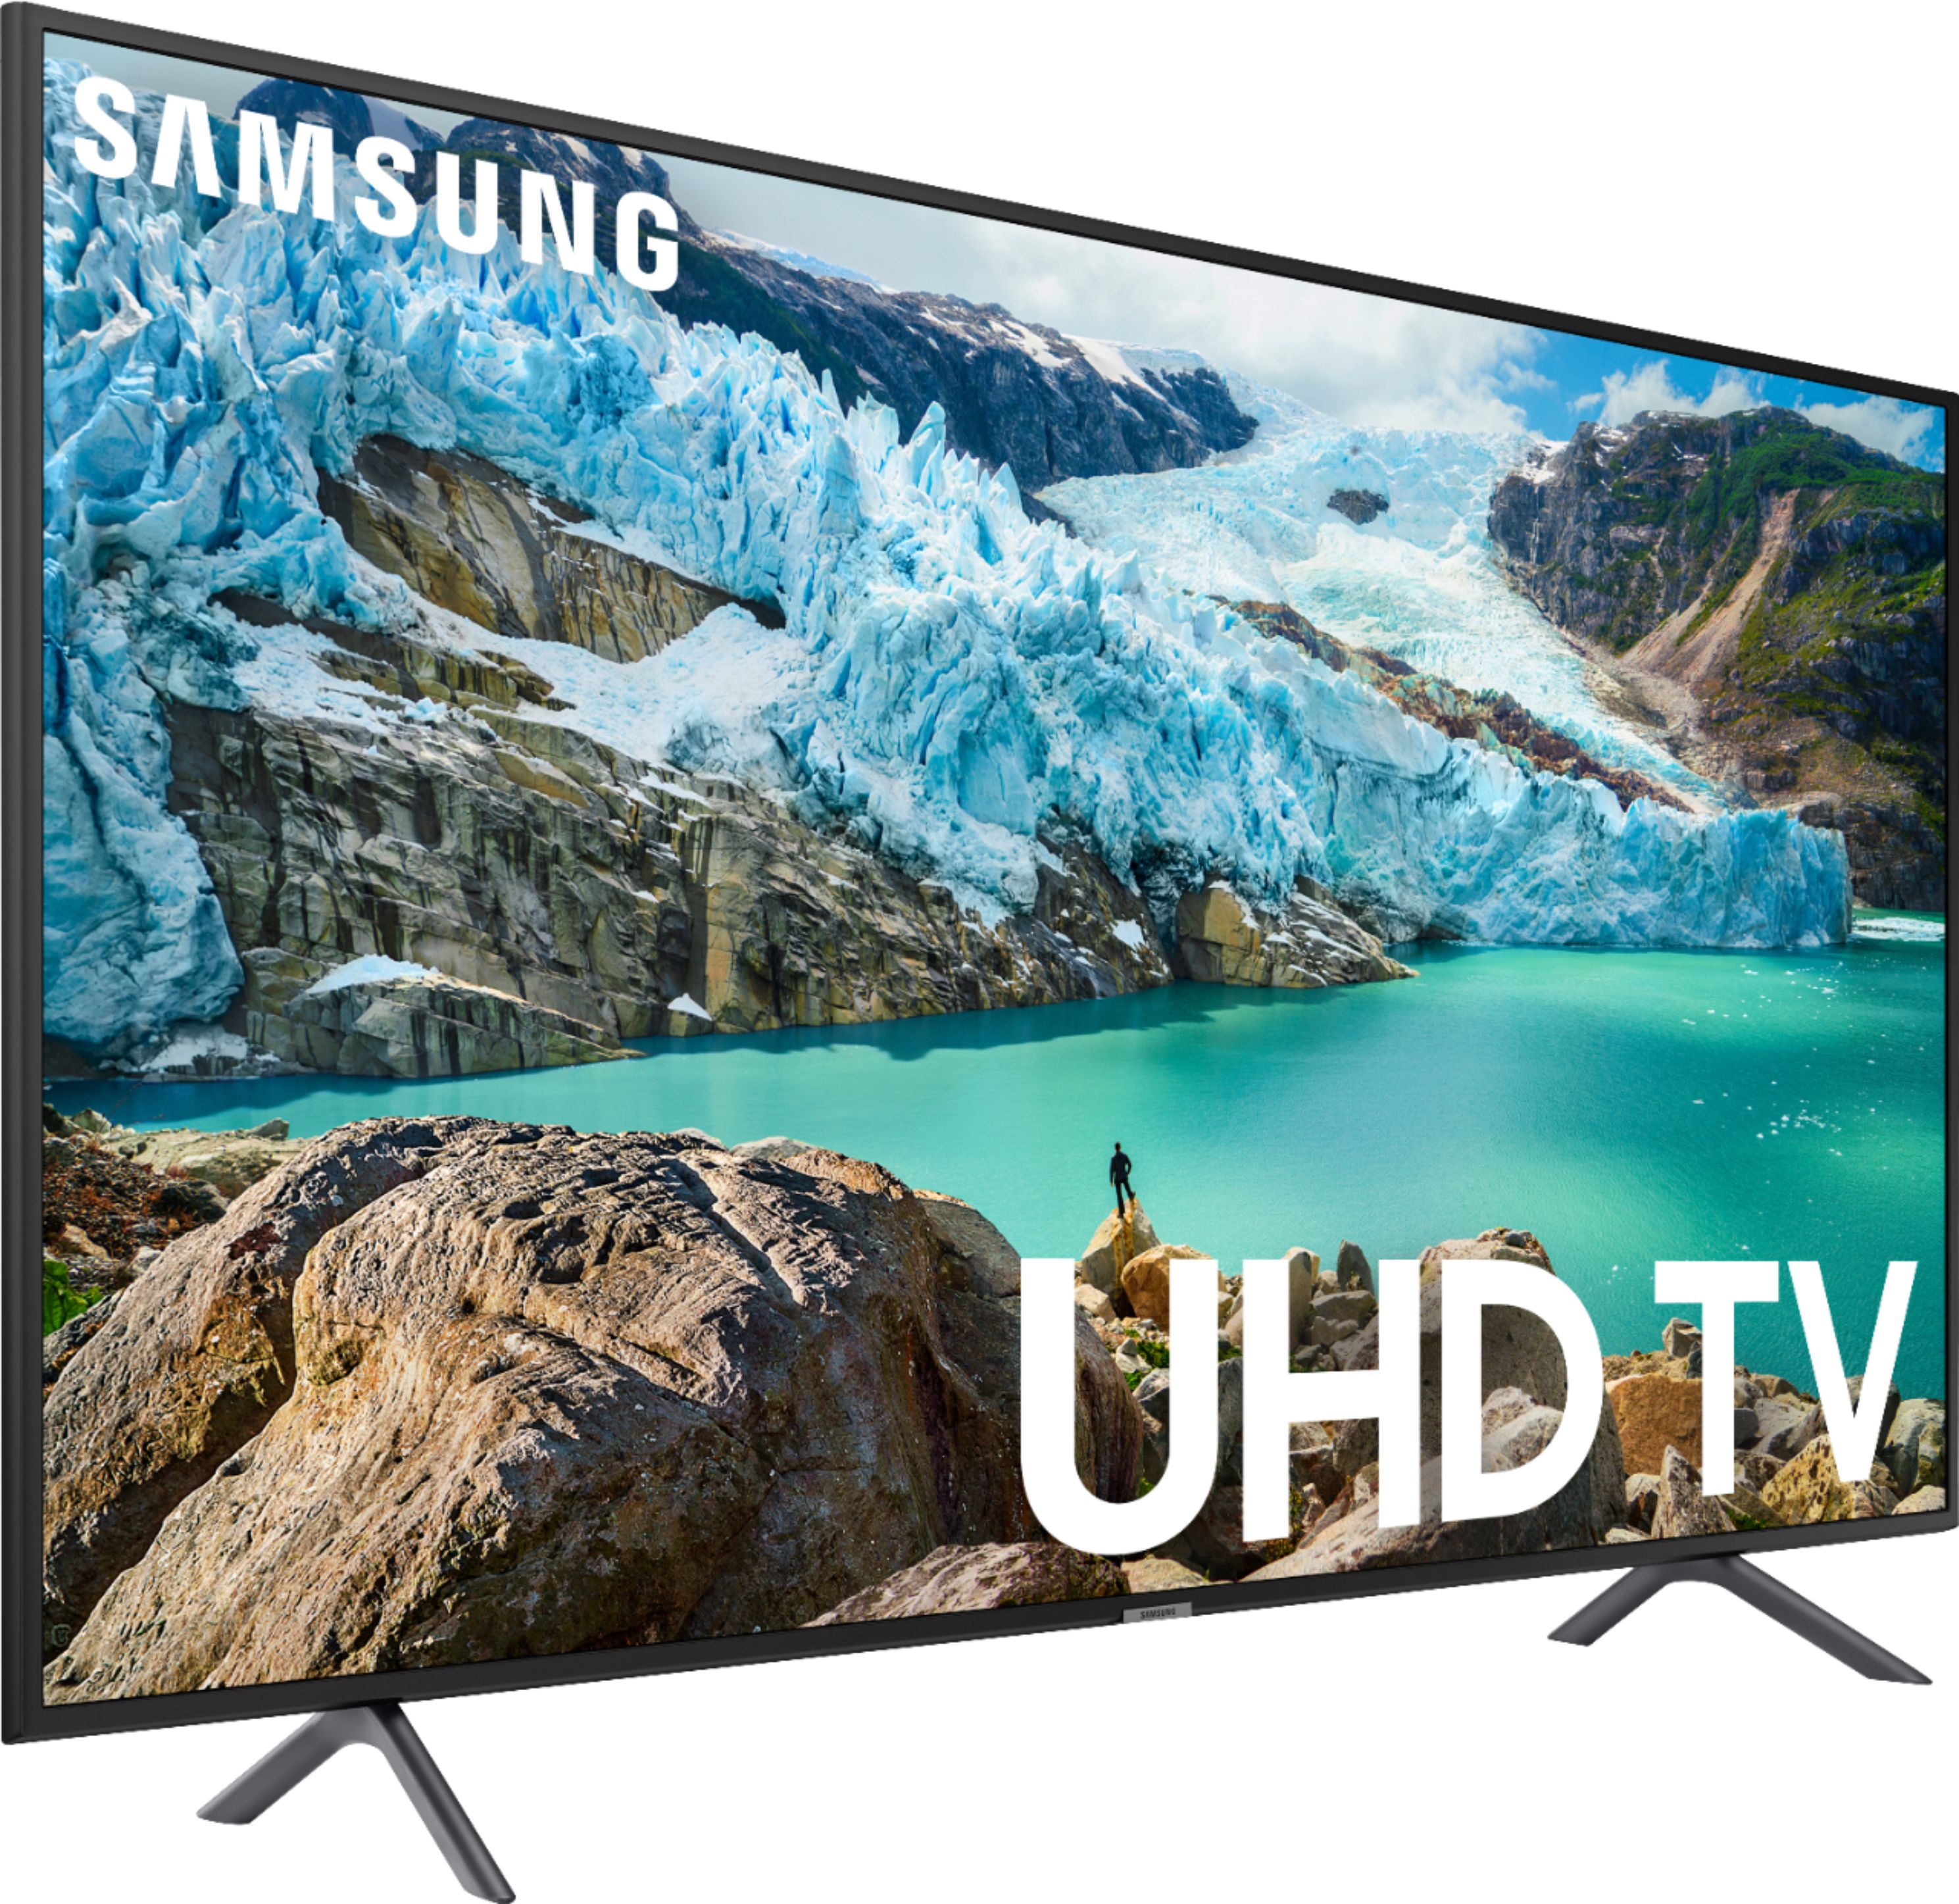 Angle View: Samsung - 75" Class 7 Series LED 4K UHD Smart Tizen TV